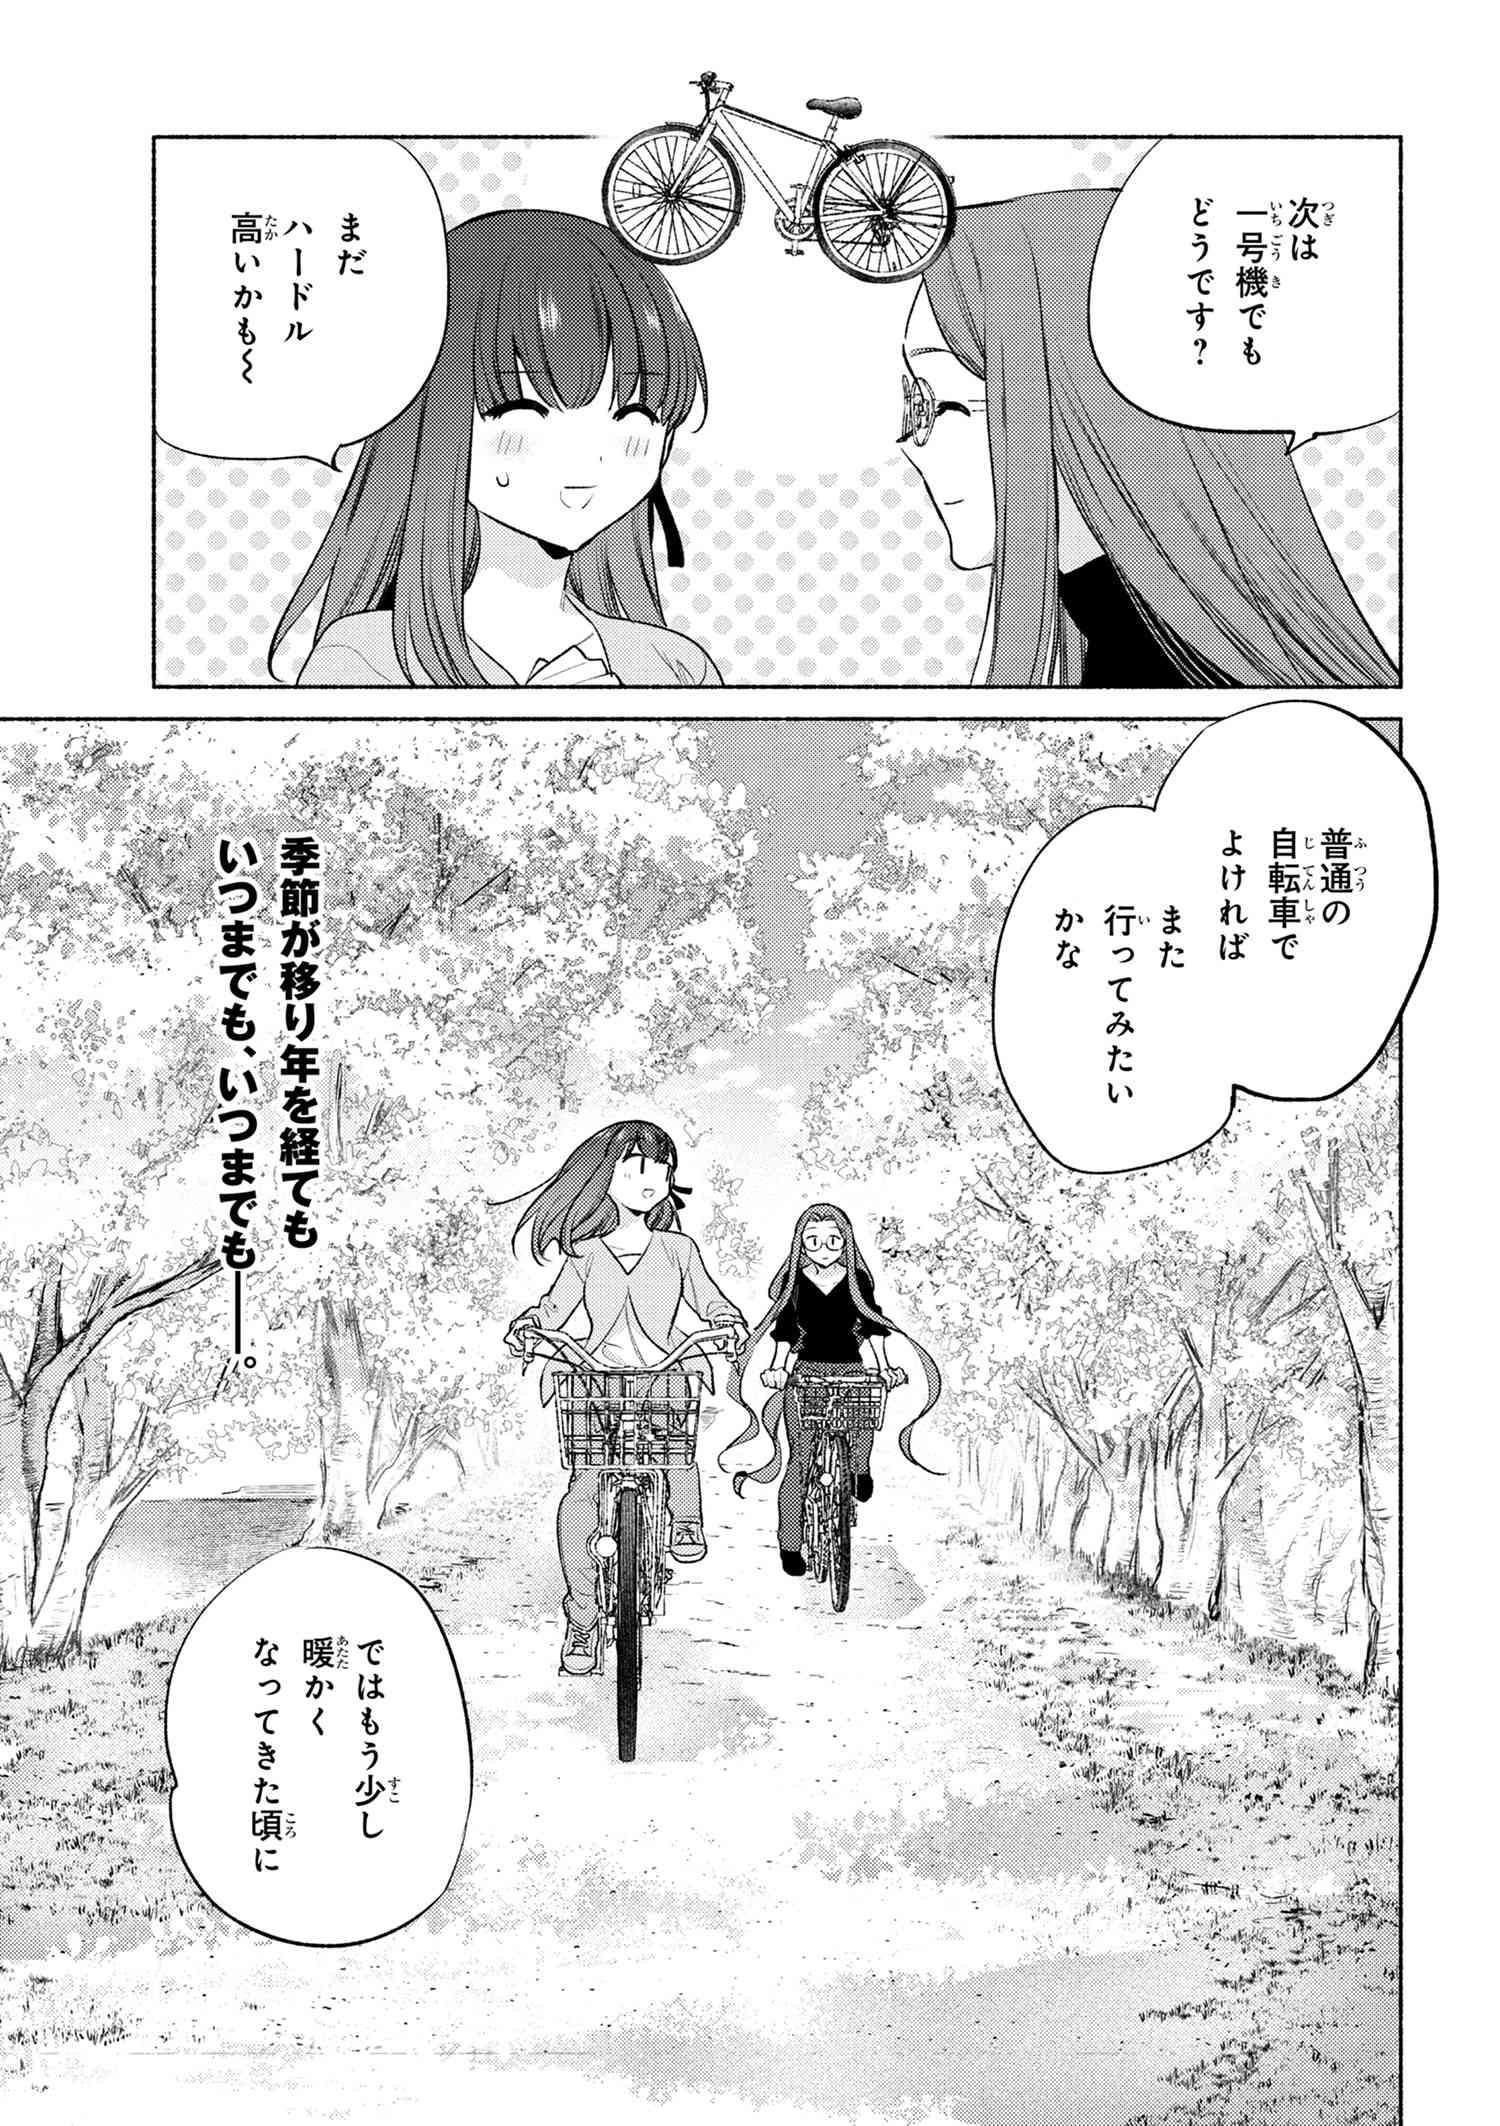 Emiya-san Chi no Kyou no Gohan - Chapter 60 - Page 21